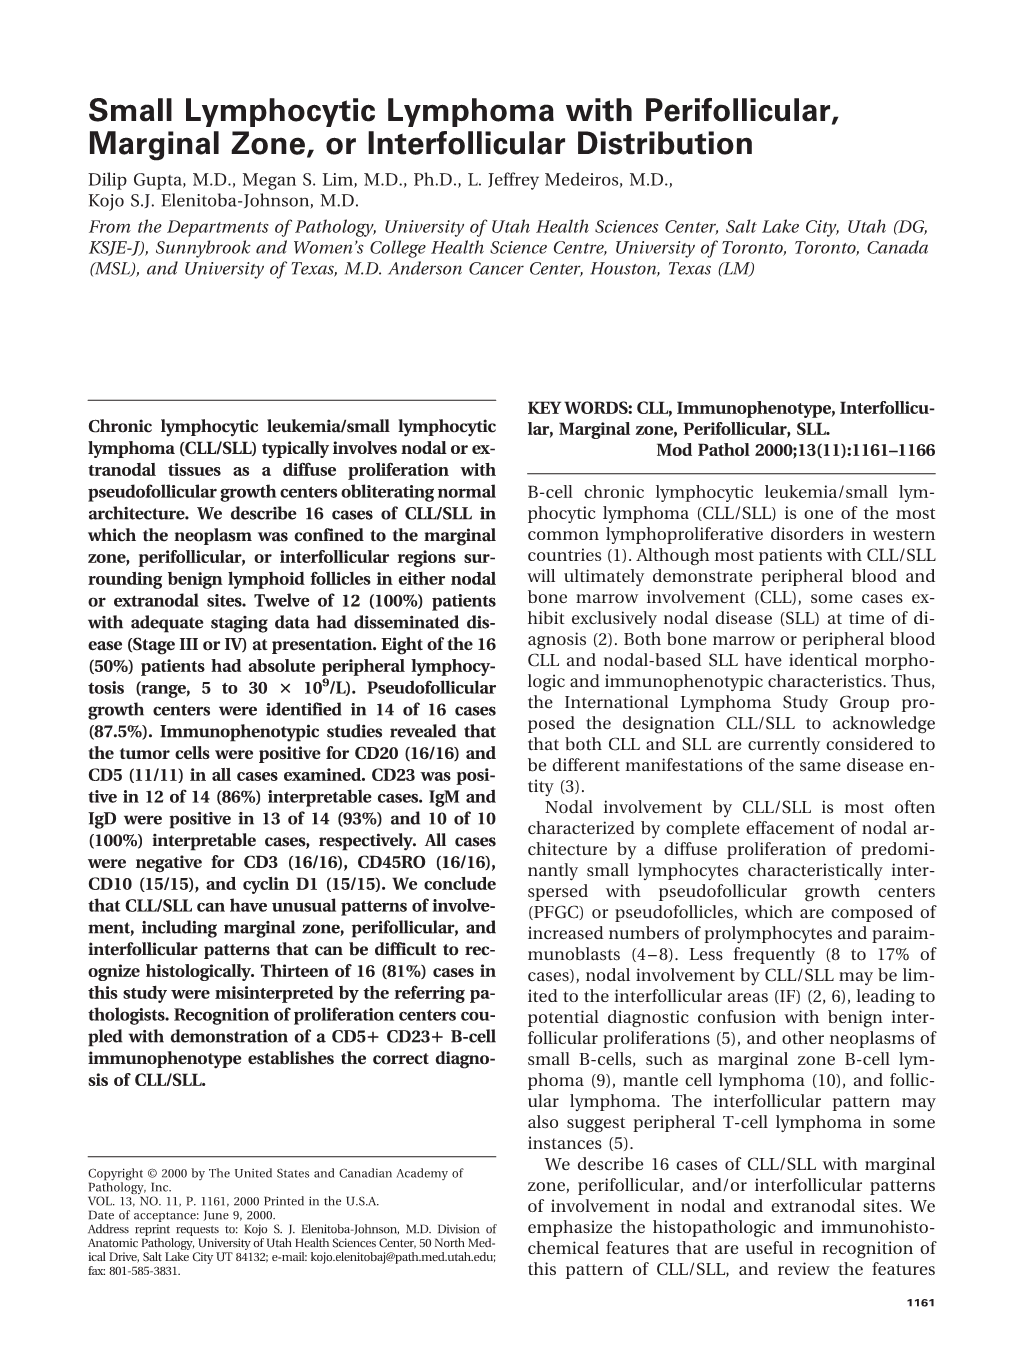 Small Lymphocytic Lymphoma with Perifollicular, Marginal Zone, Or Interfollicular Distribution Dilip Gupta, M.D., Megan S